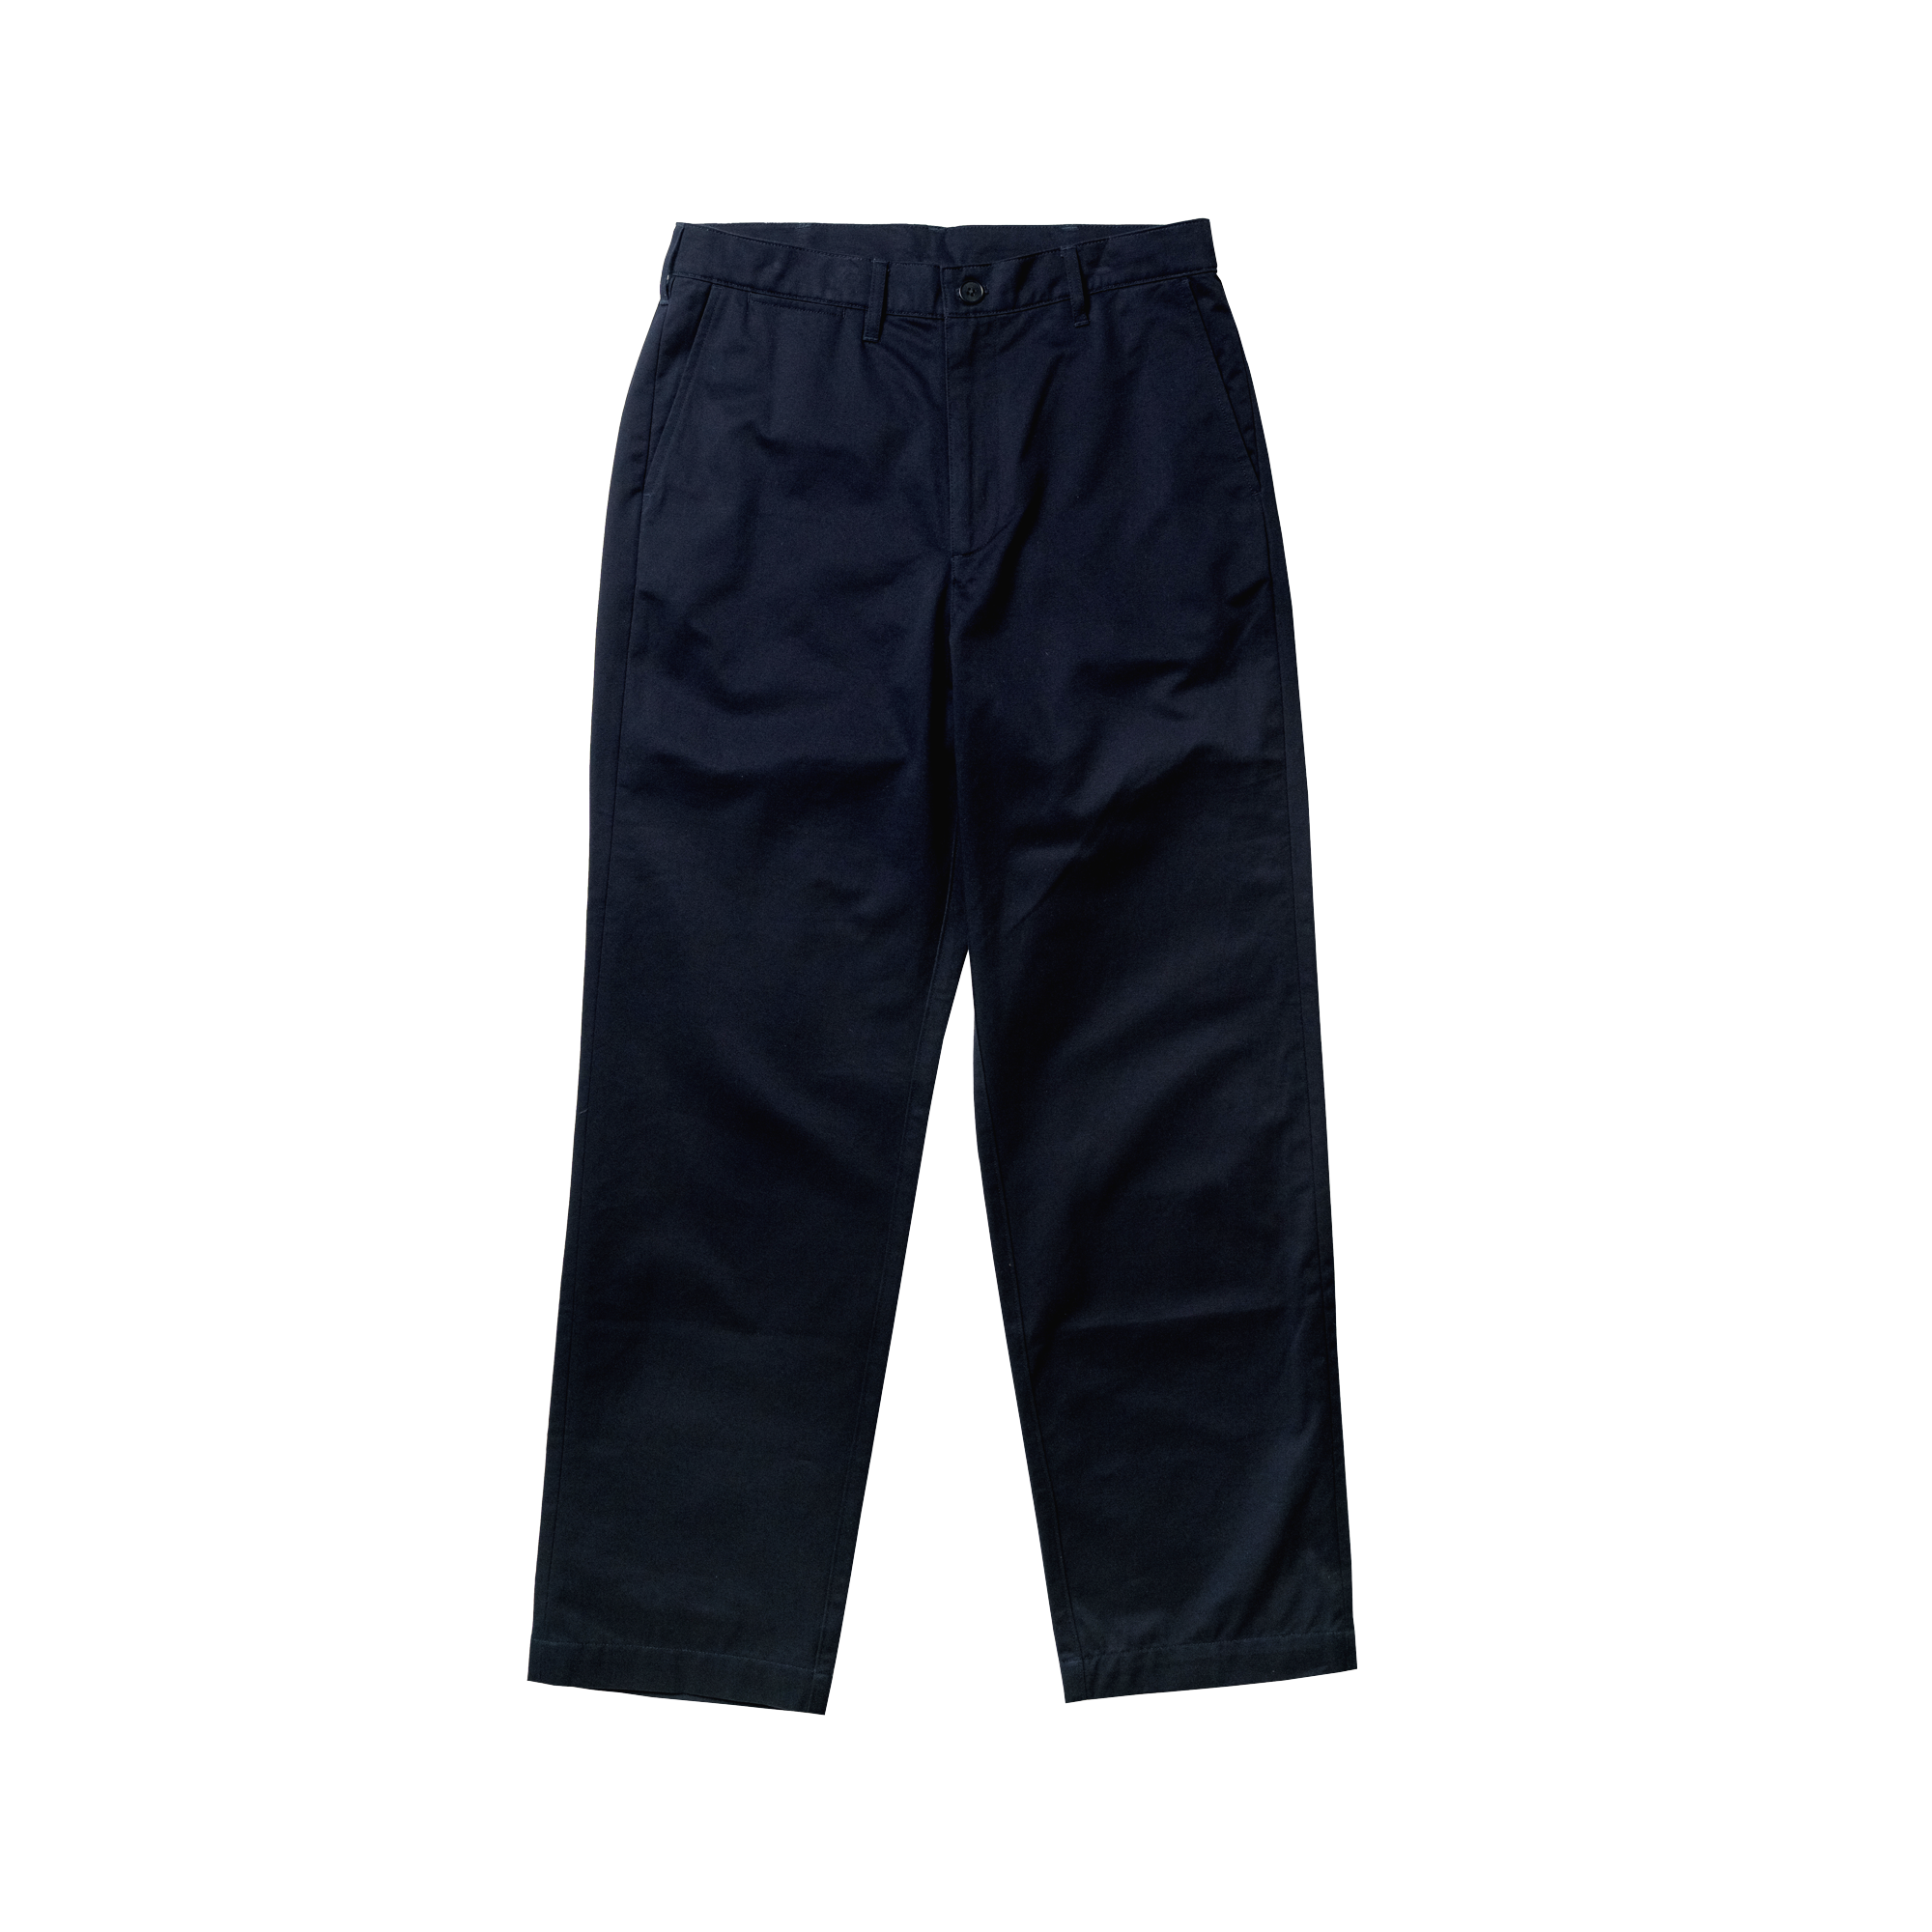 Regular Cotton Pants (Dark Navy)